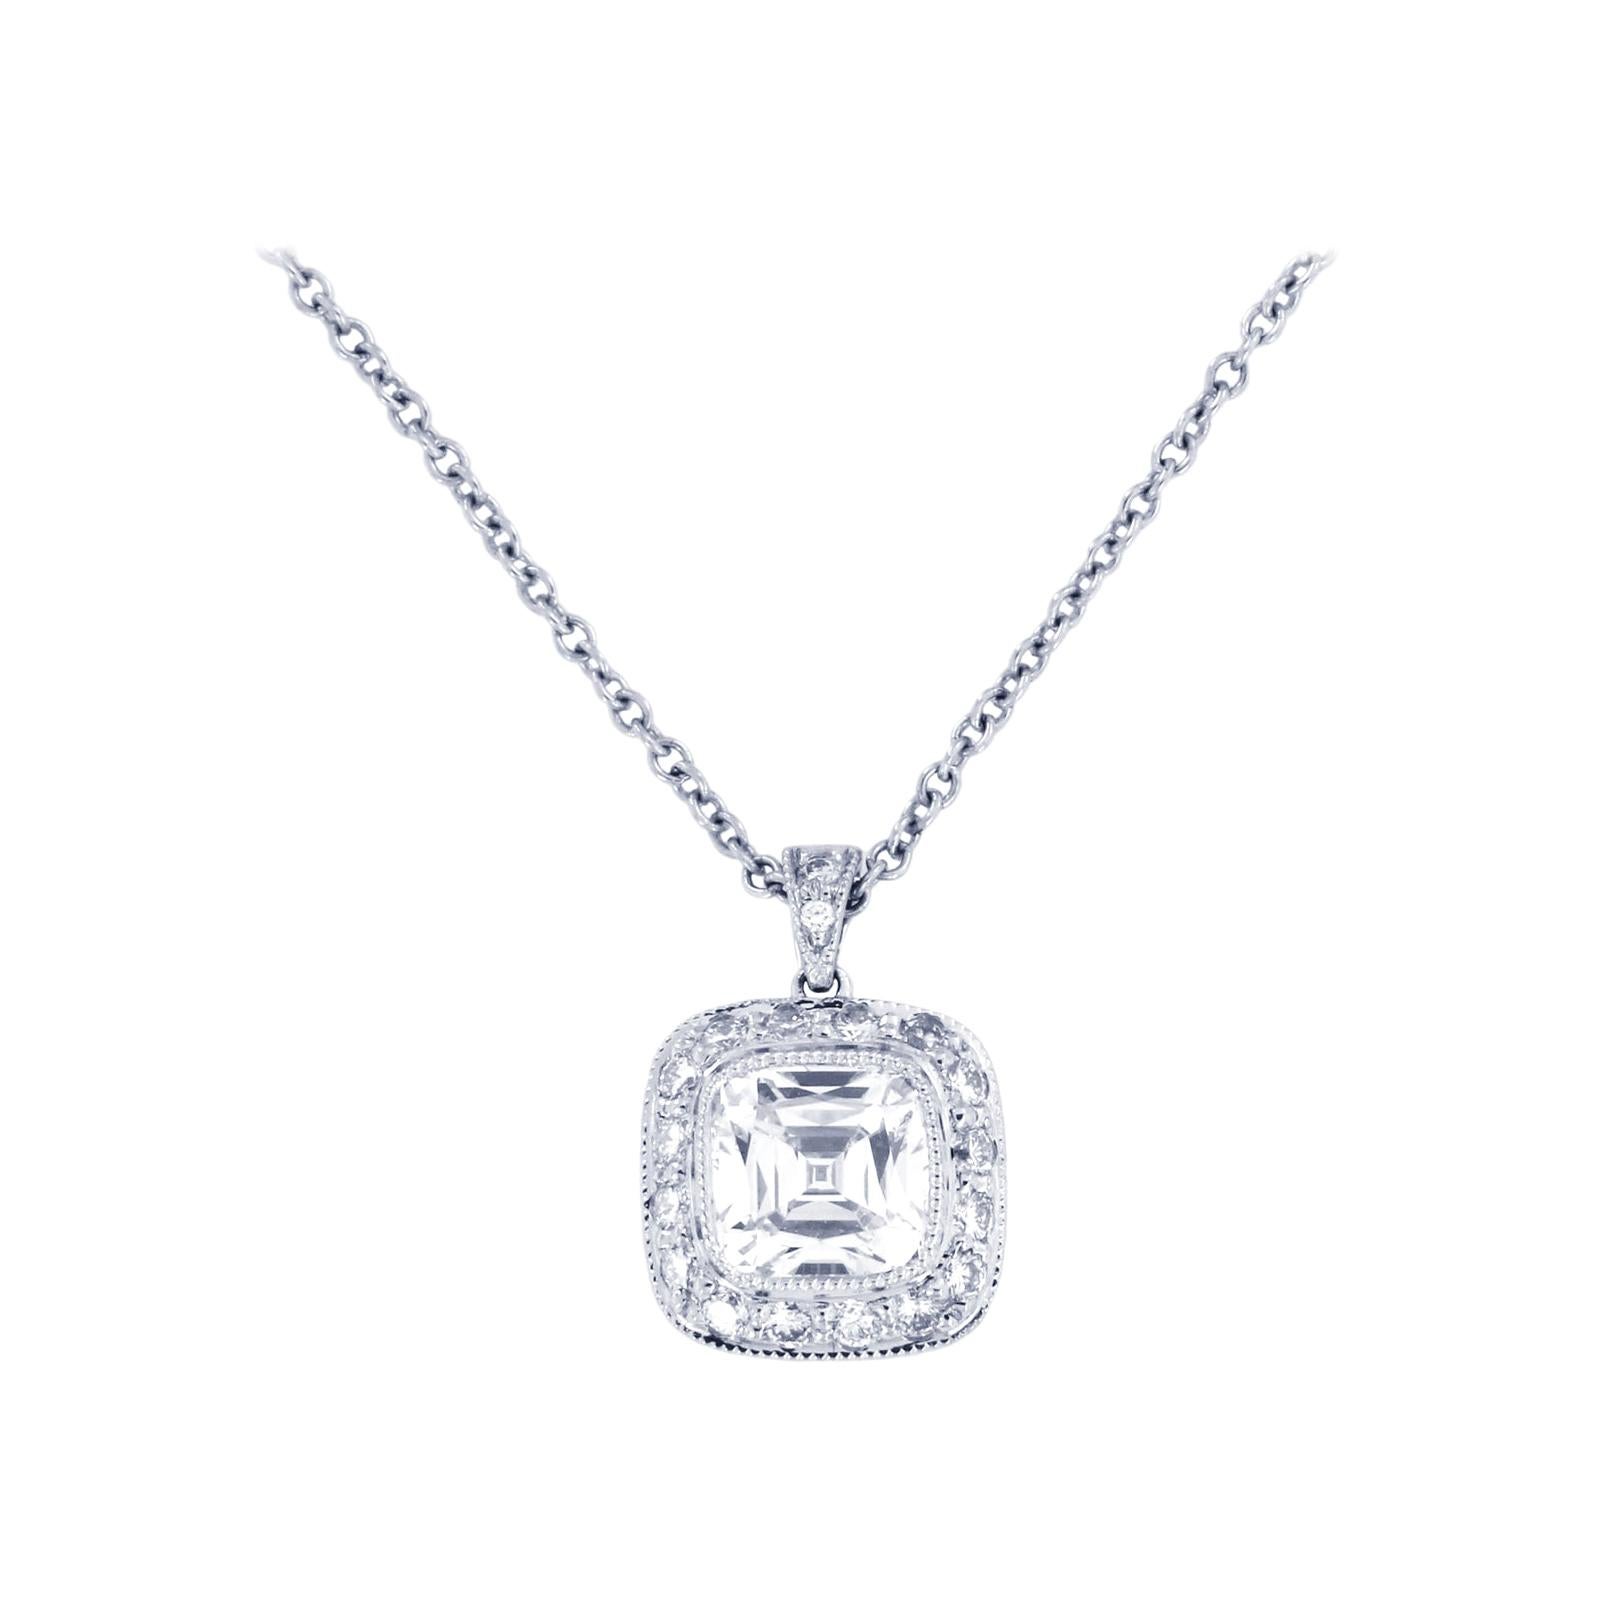 Tiffany & Co. Legacy Diamond Pendant in Platinum